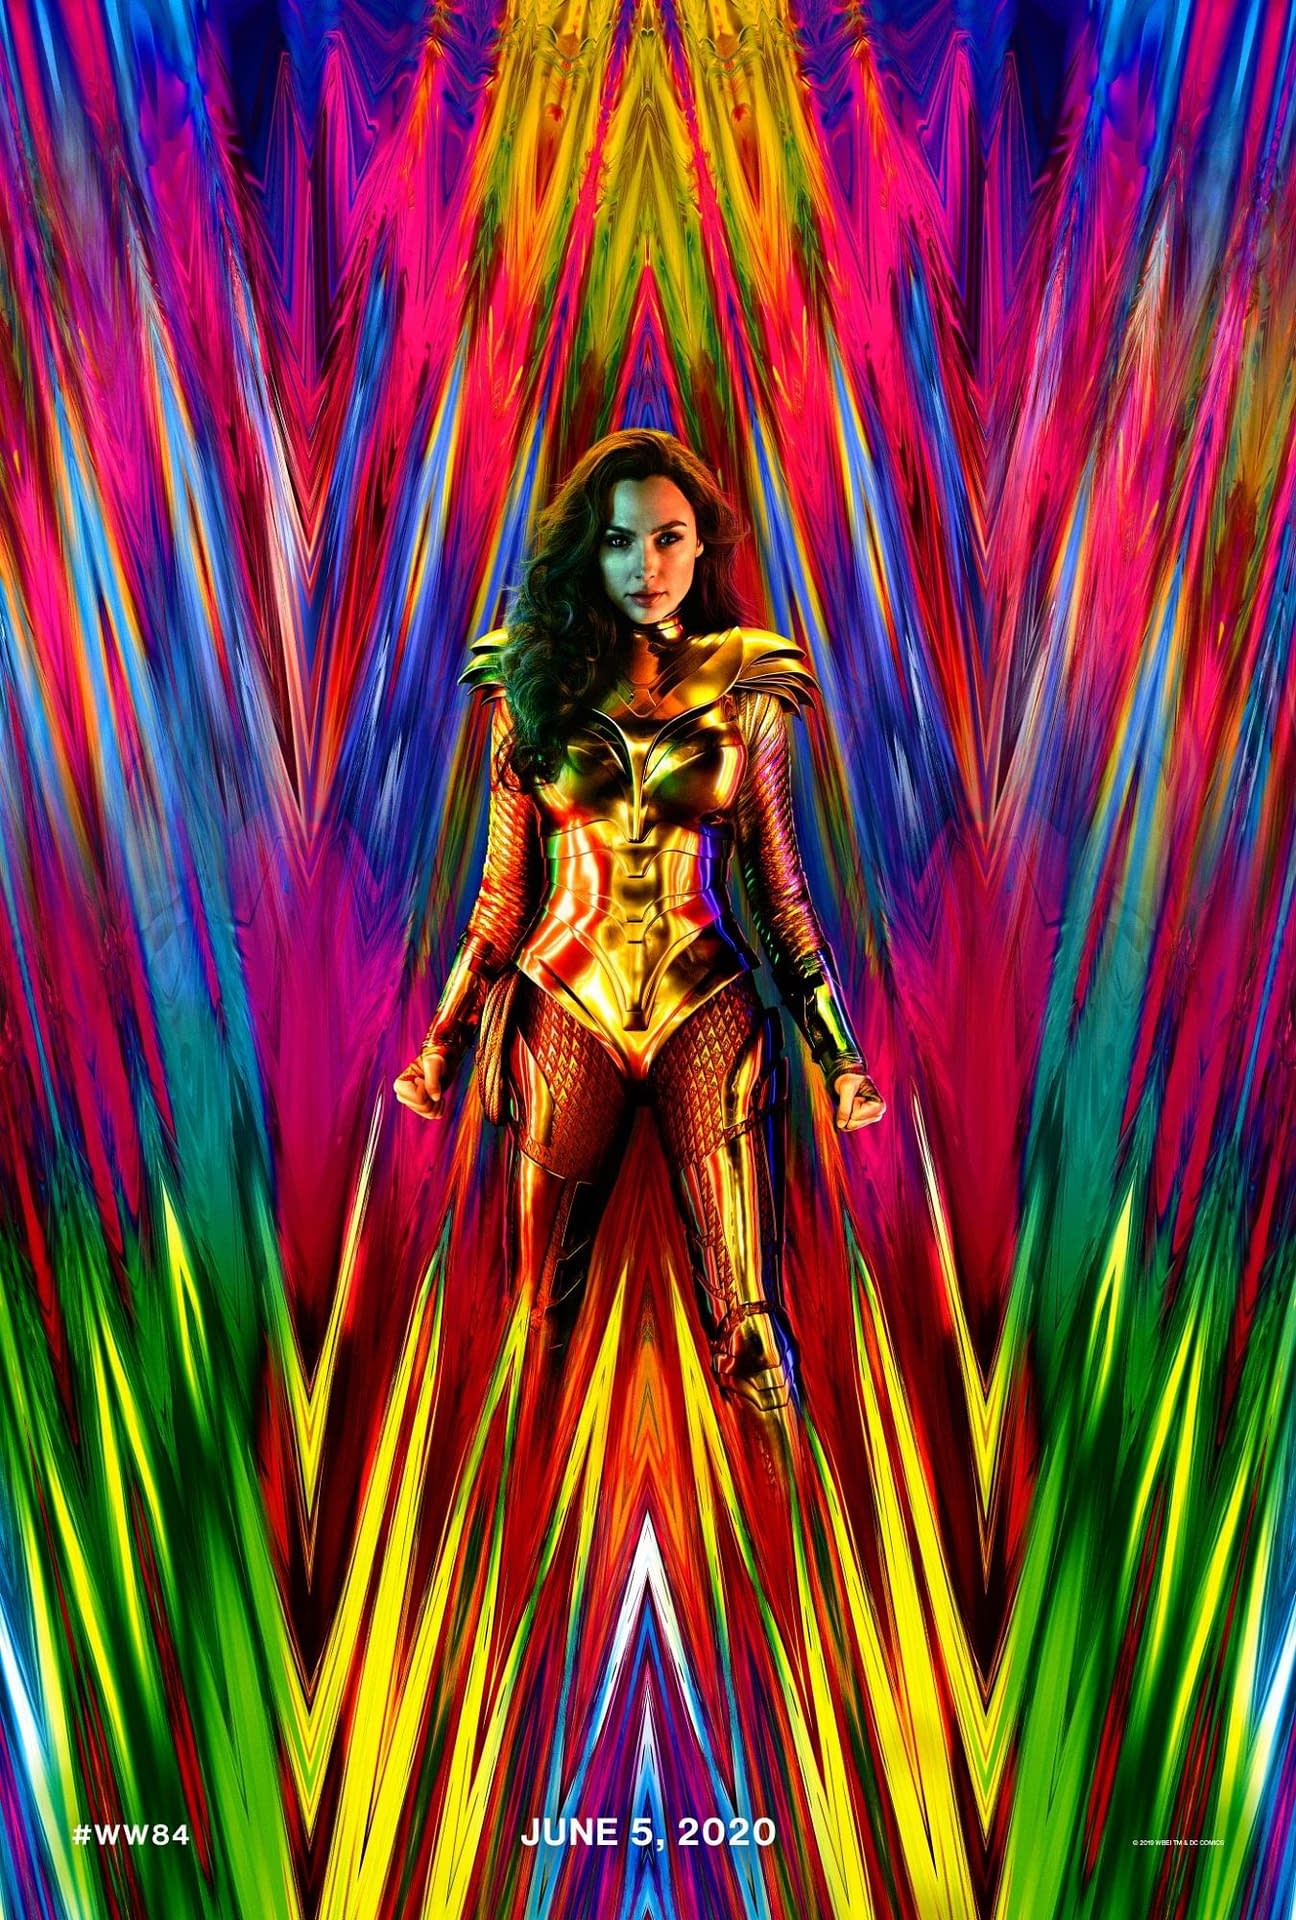 'Wonder Woman: 1984' Poster Shared by Patty Jenkins